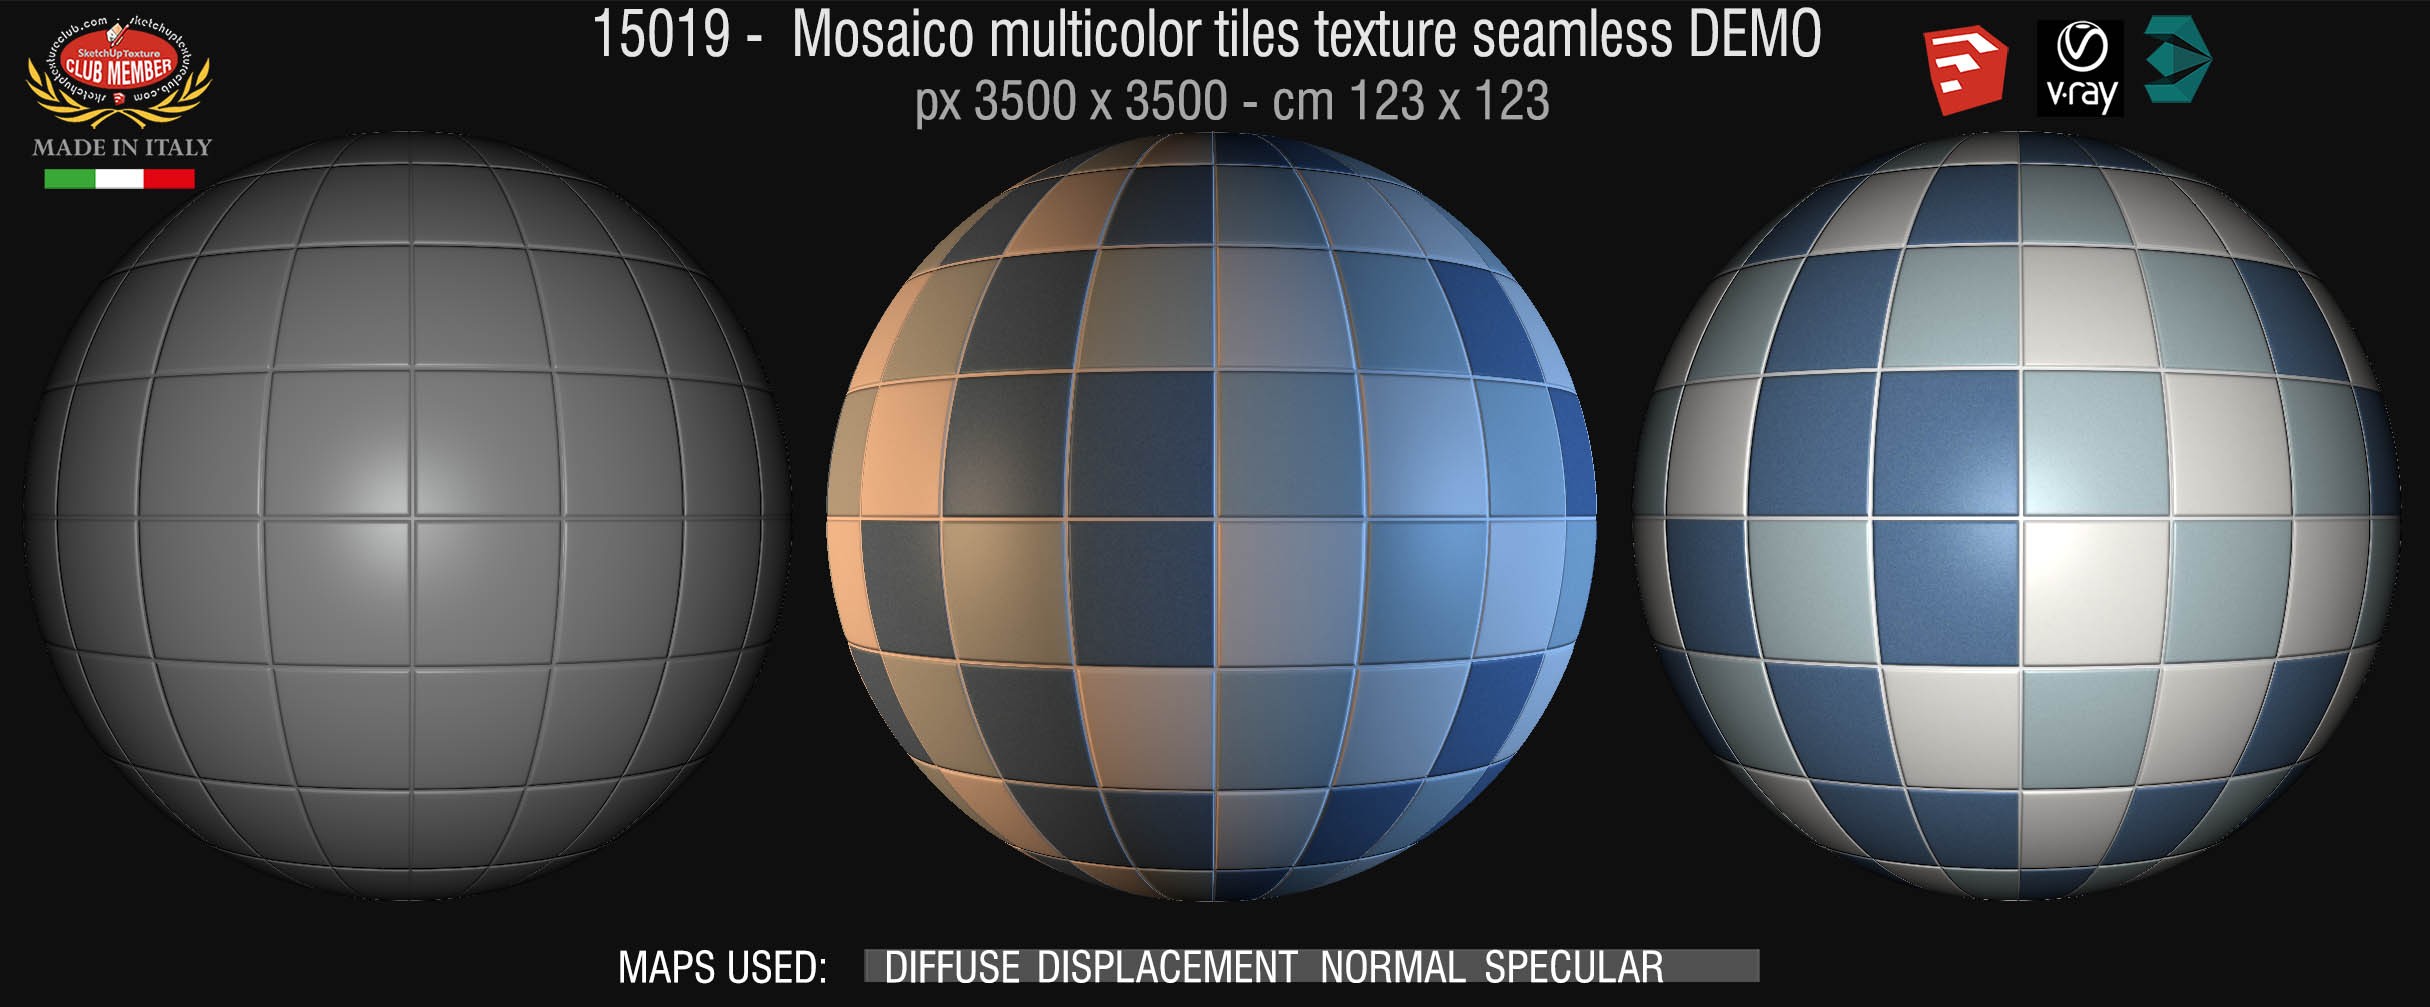 15019 Mosaico multicolor tiles texture seamless + maps DEMO